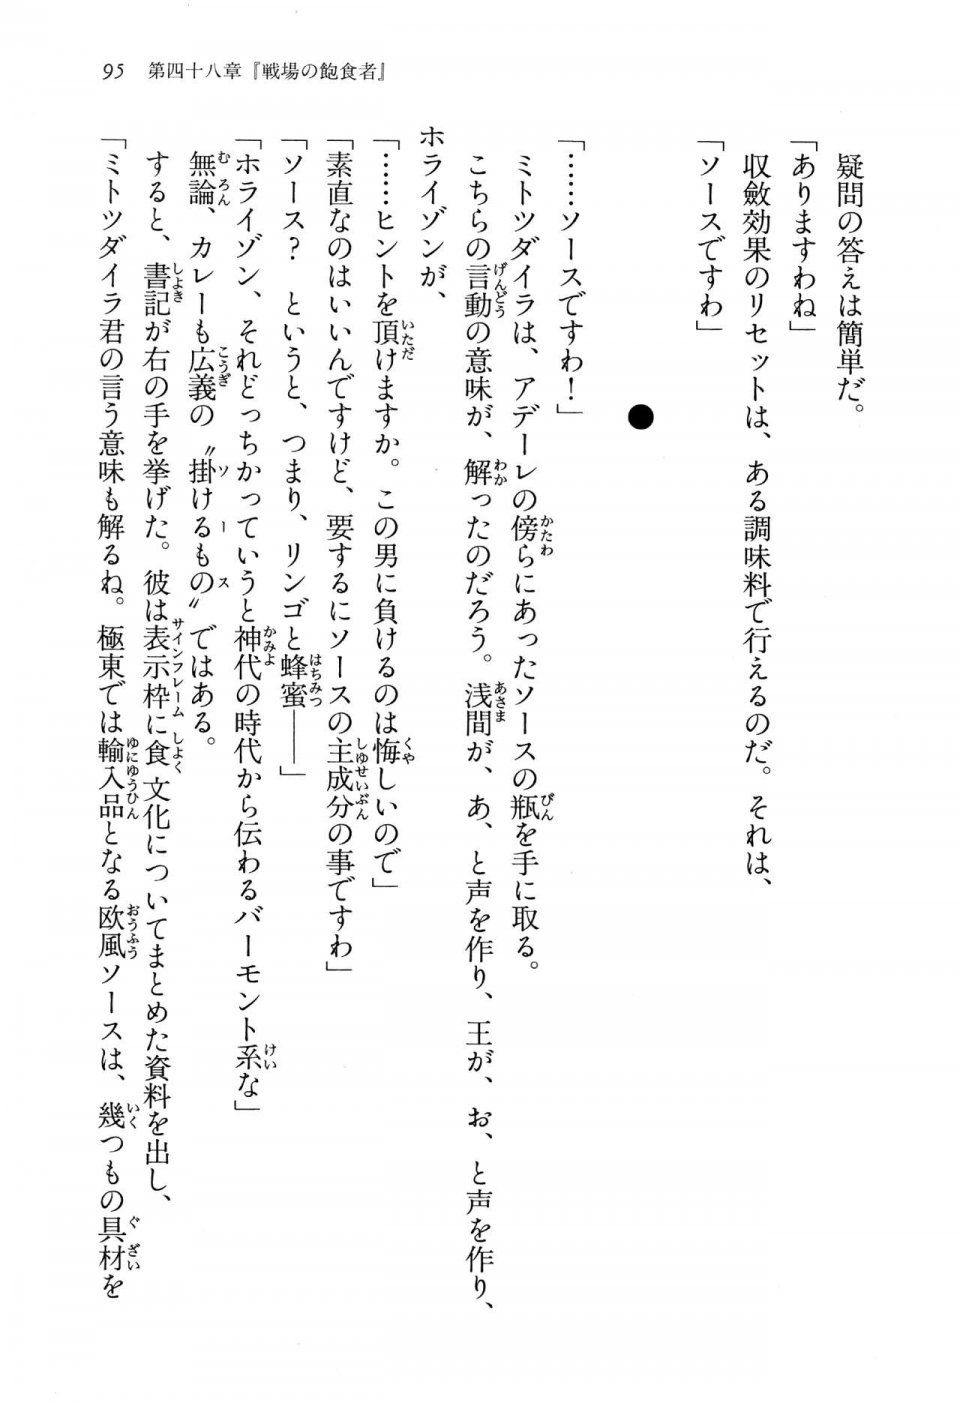 Kyoukai Senjou no Horizon LN Vol 15(6C) Part 1 - Photo #95